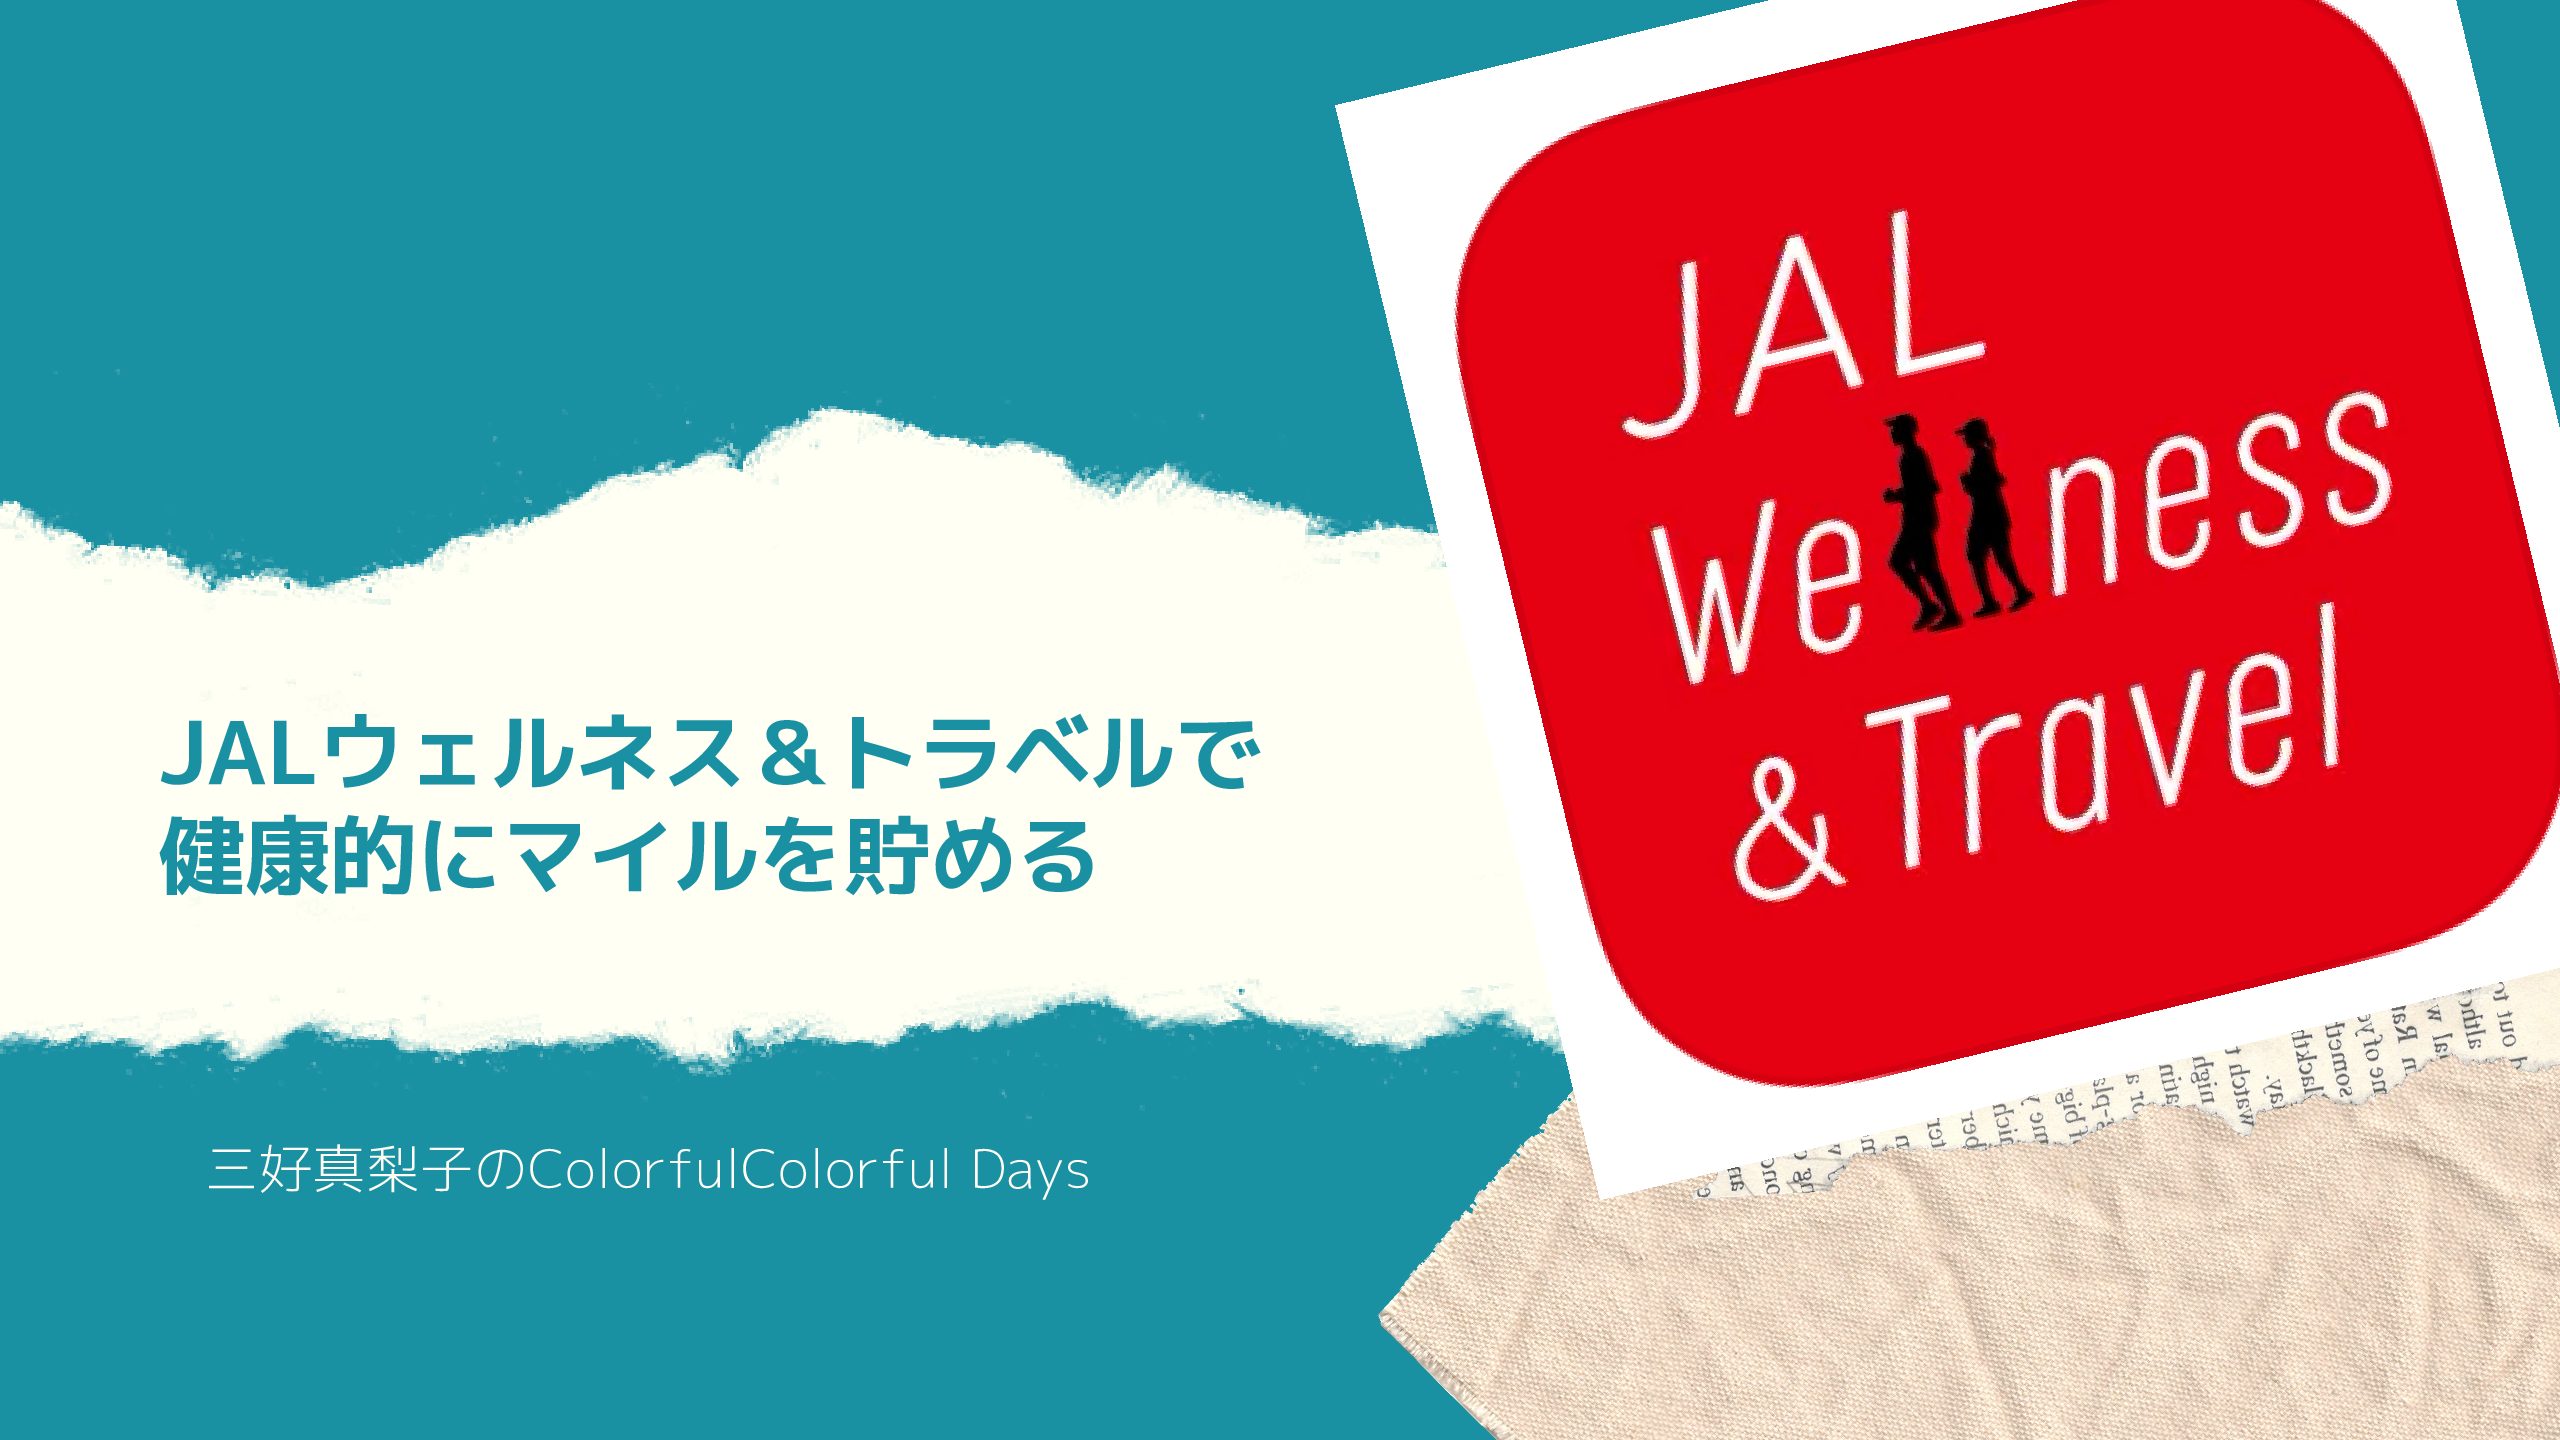 jal-wellness-travel